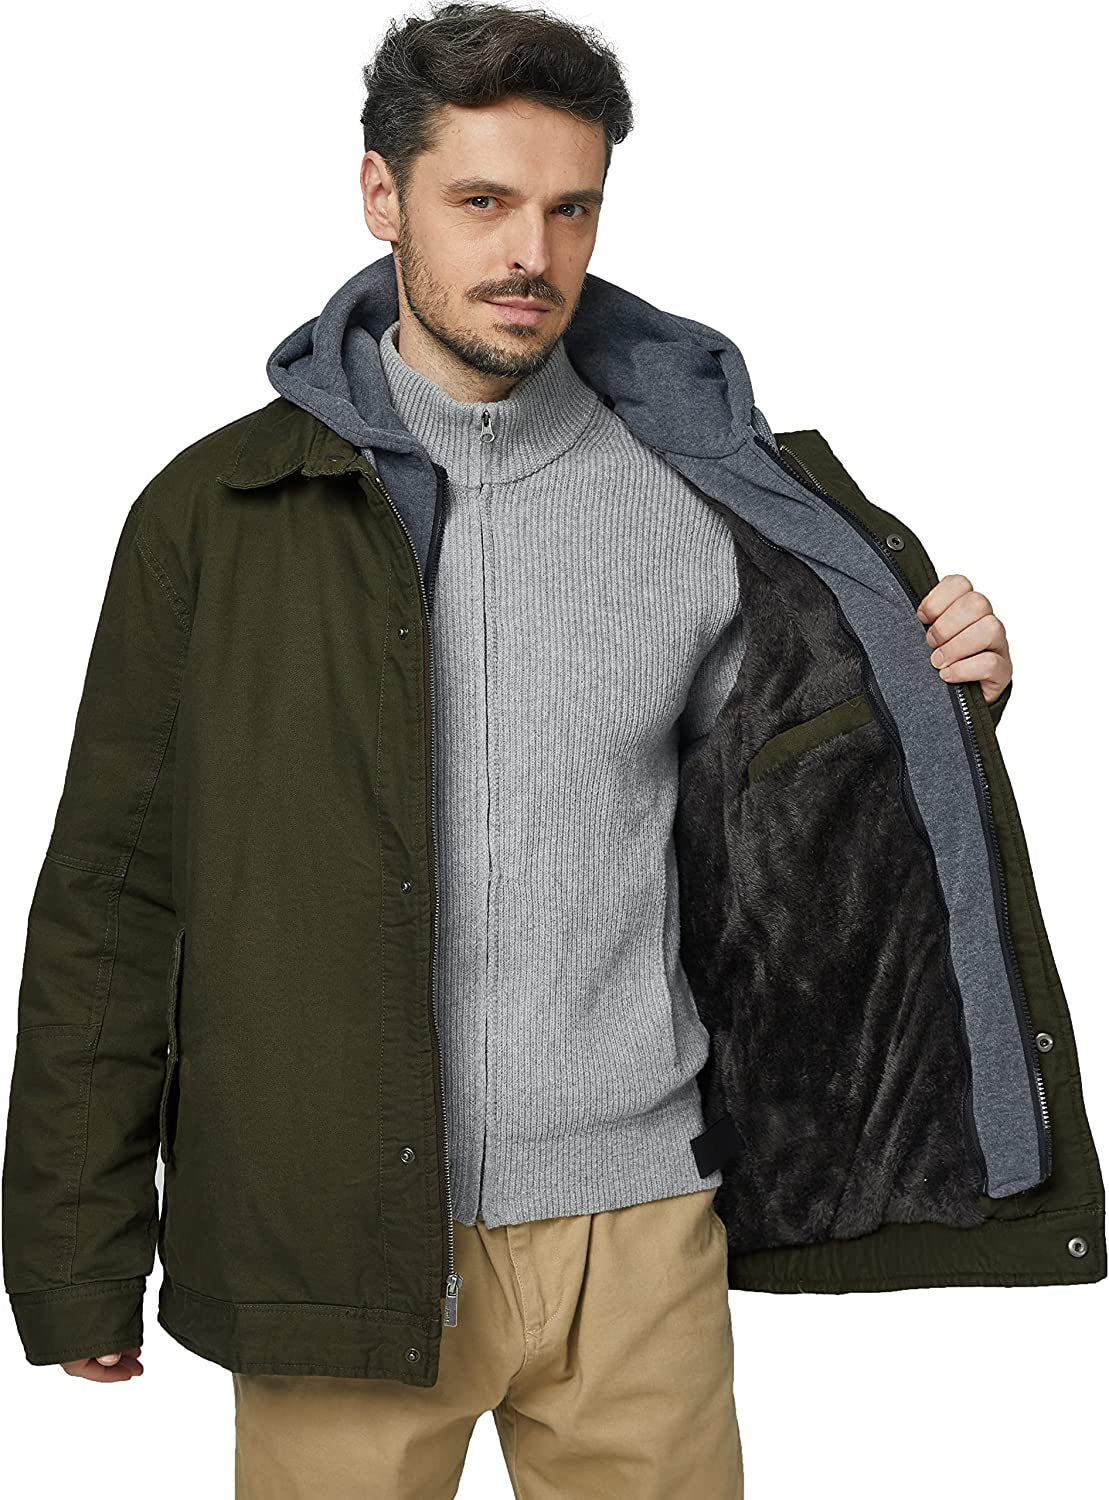 Men's Warm Winter Cotton Jacket 